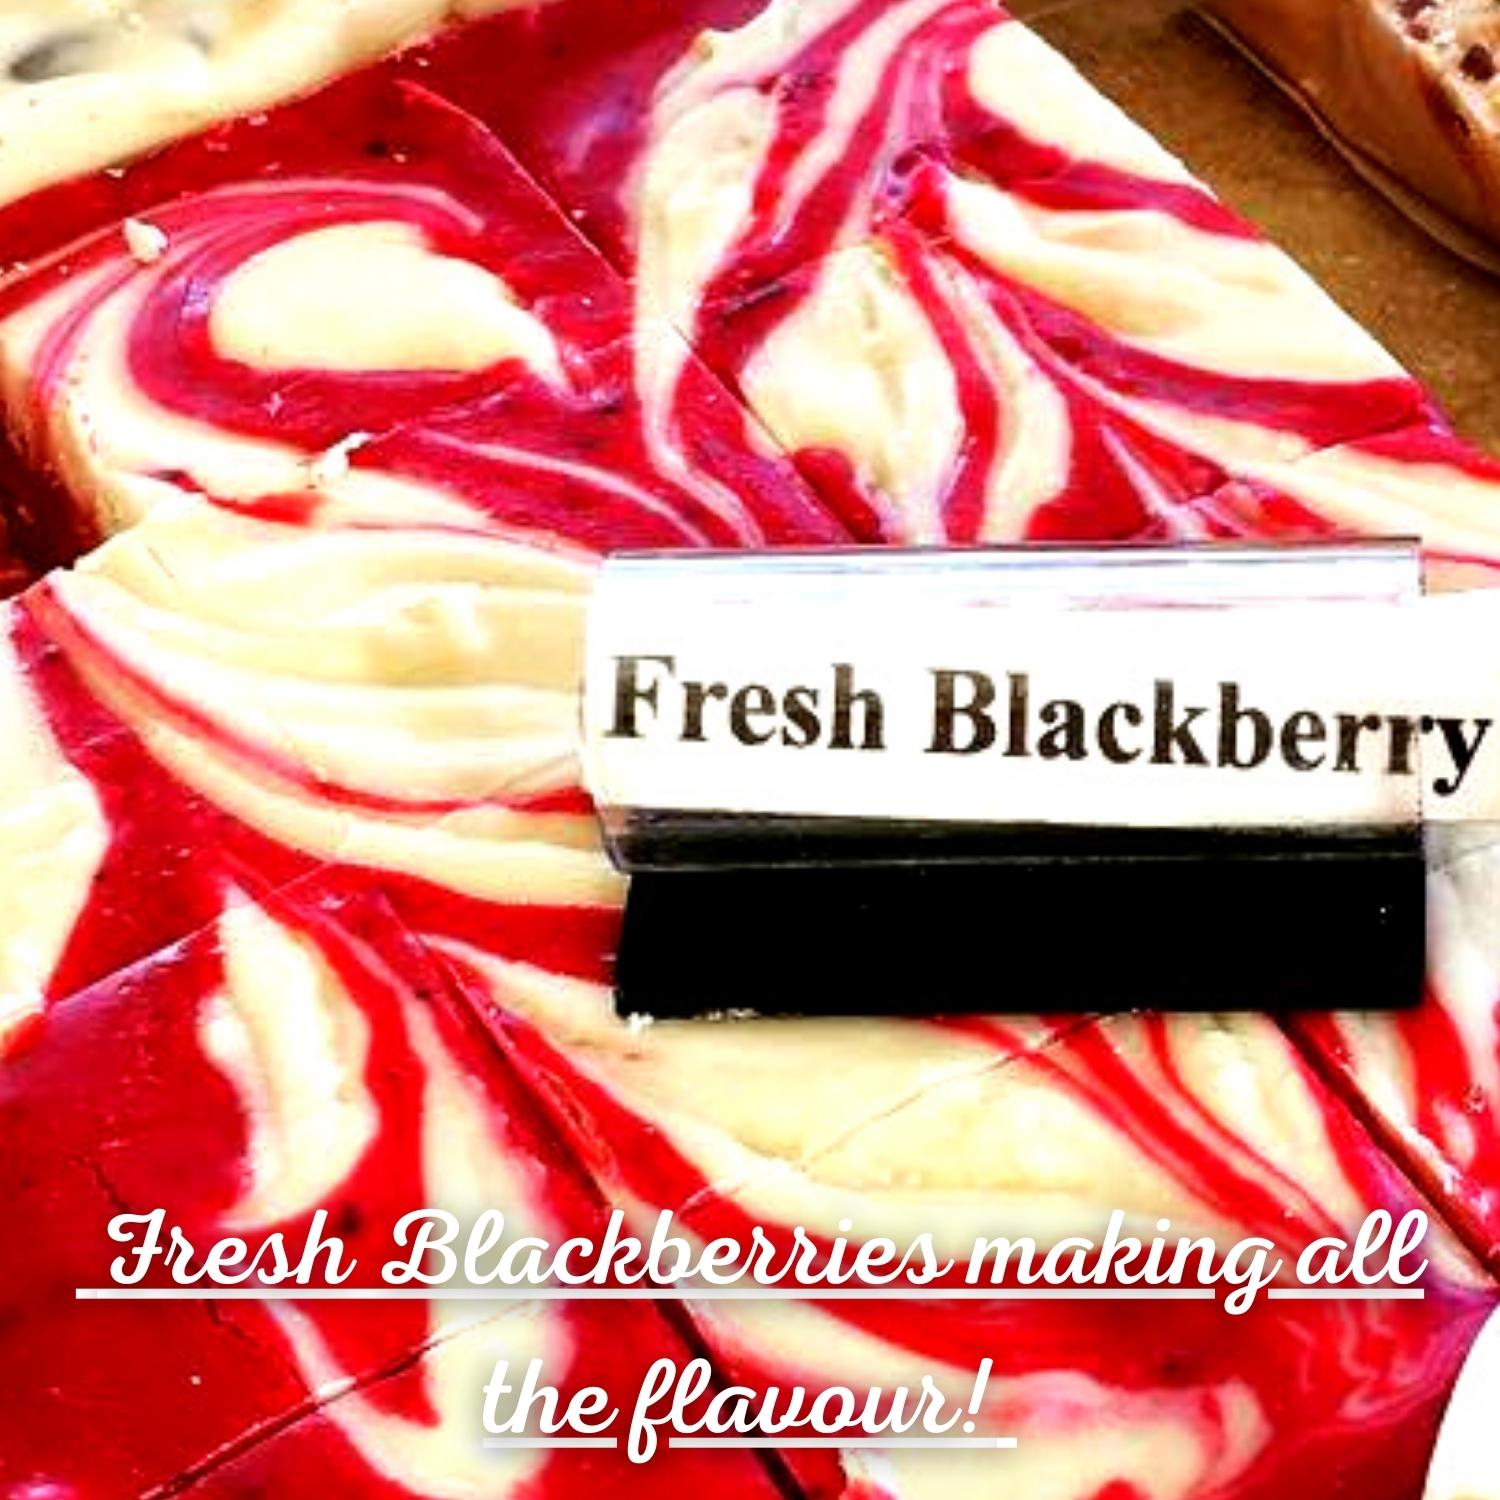 Fresh Blackberry Fudge Fresh Blackberries making all the flavour! Seasonal